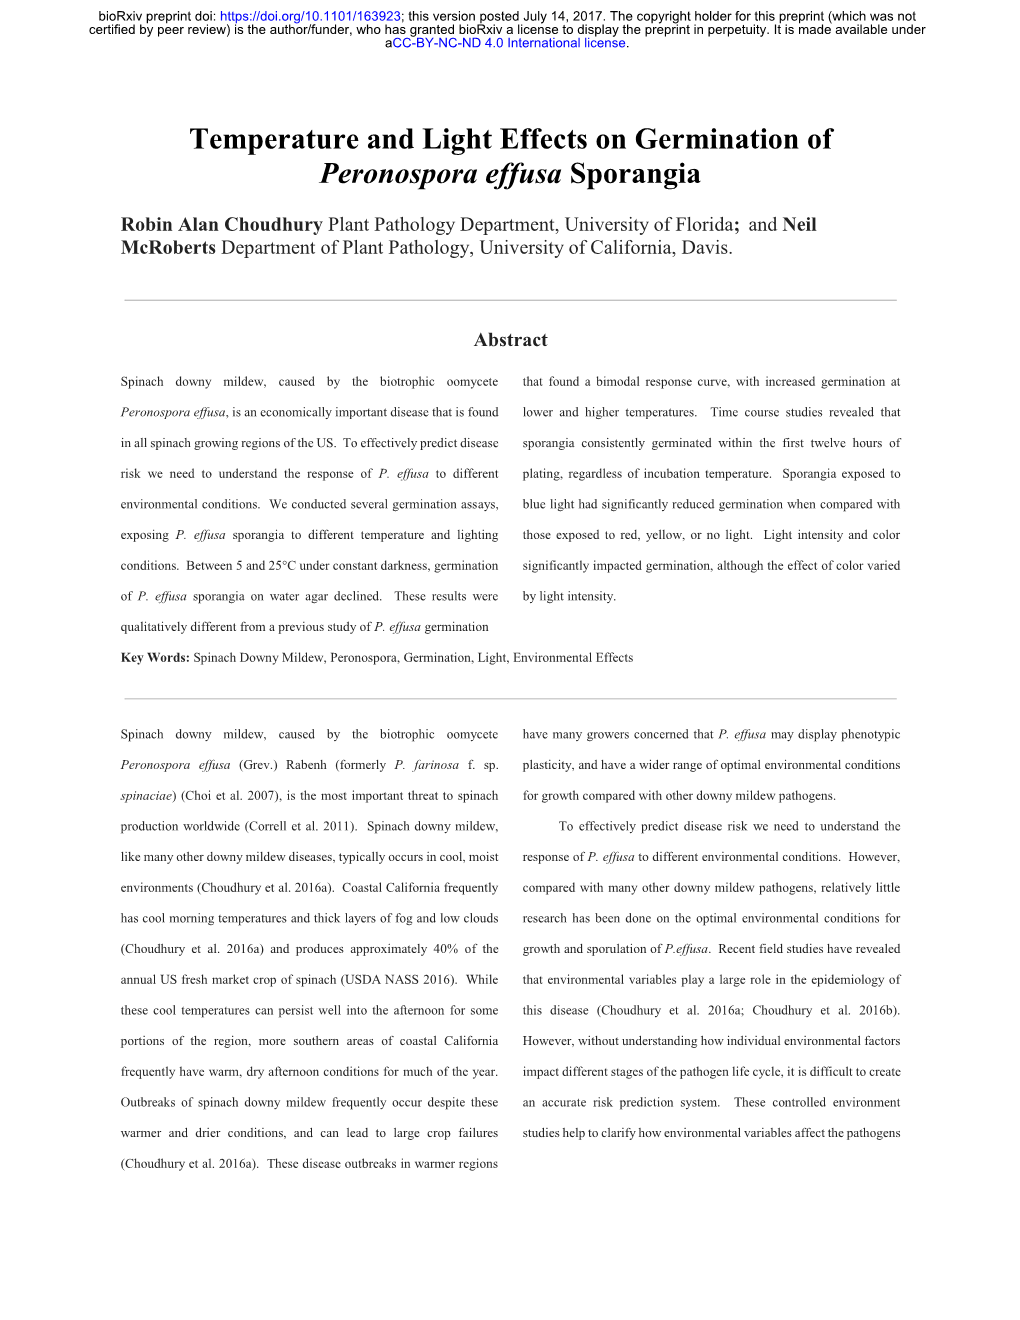 Temperature and Light Effects on Germination of Peronospora Effusa Sporangia